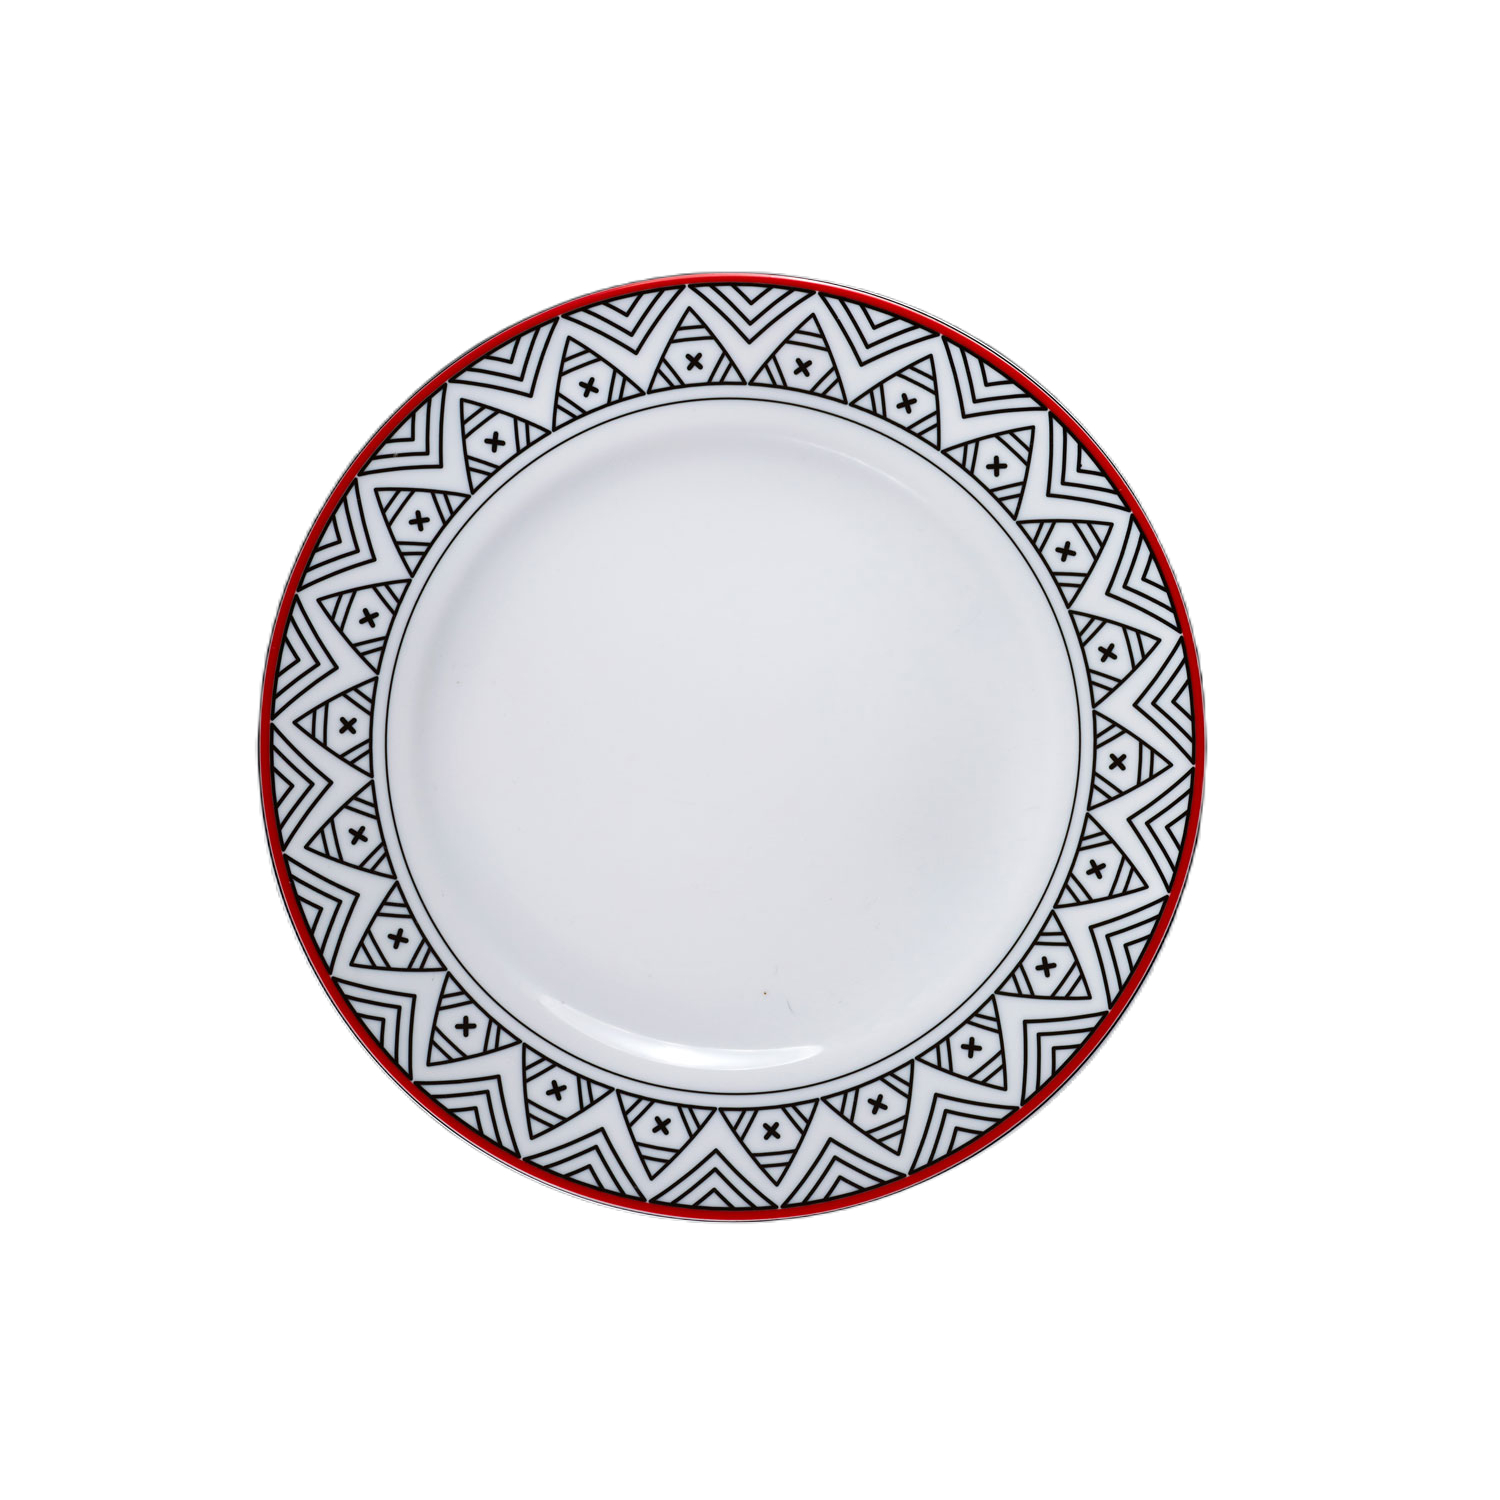 Тарелка Башкирский фарфор Классик геометрия, 27 см, цвет белый - фото 1